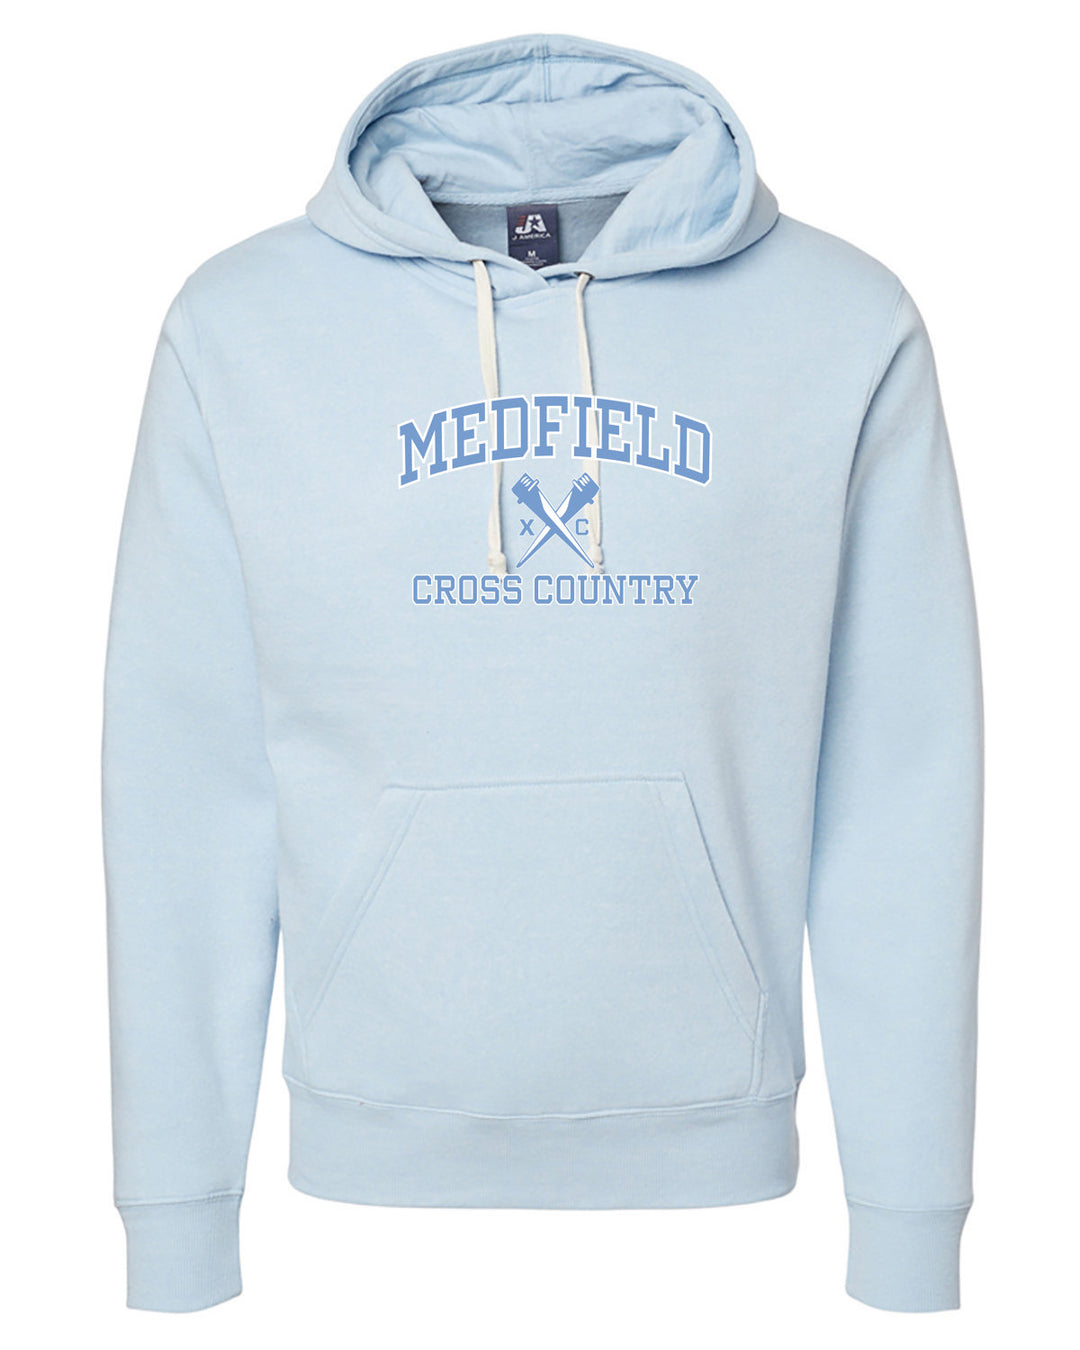 Medfield Cross Country Adult Pullover Fleece Hooded Sweatshirt (JA8871)